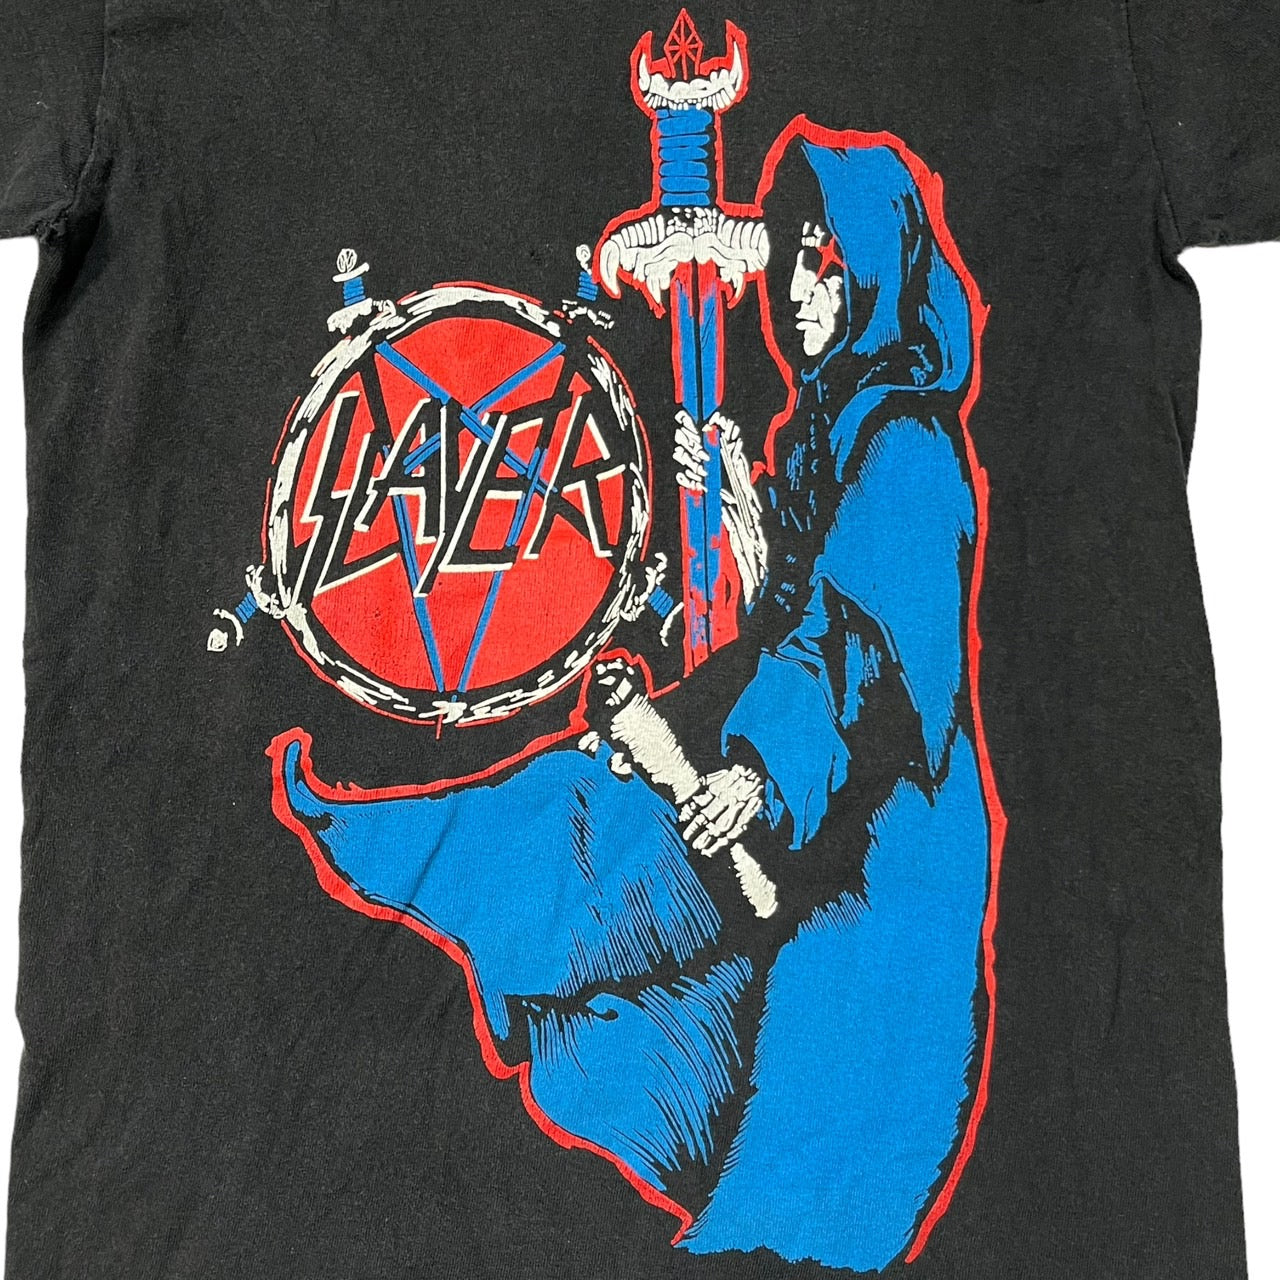 VINTAGE(ヴィンテージ) 90'sSpill the Blood Concert T-Shirt/バンドTシャツ SIZE S  ブラック×ブルー×レッド Spill the Blood/スピル・ザ・ブラッド　推定90年代